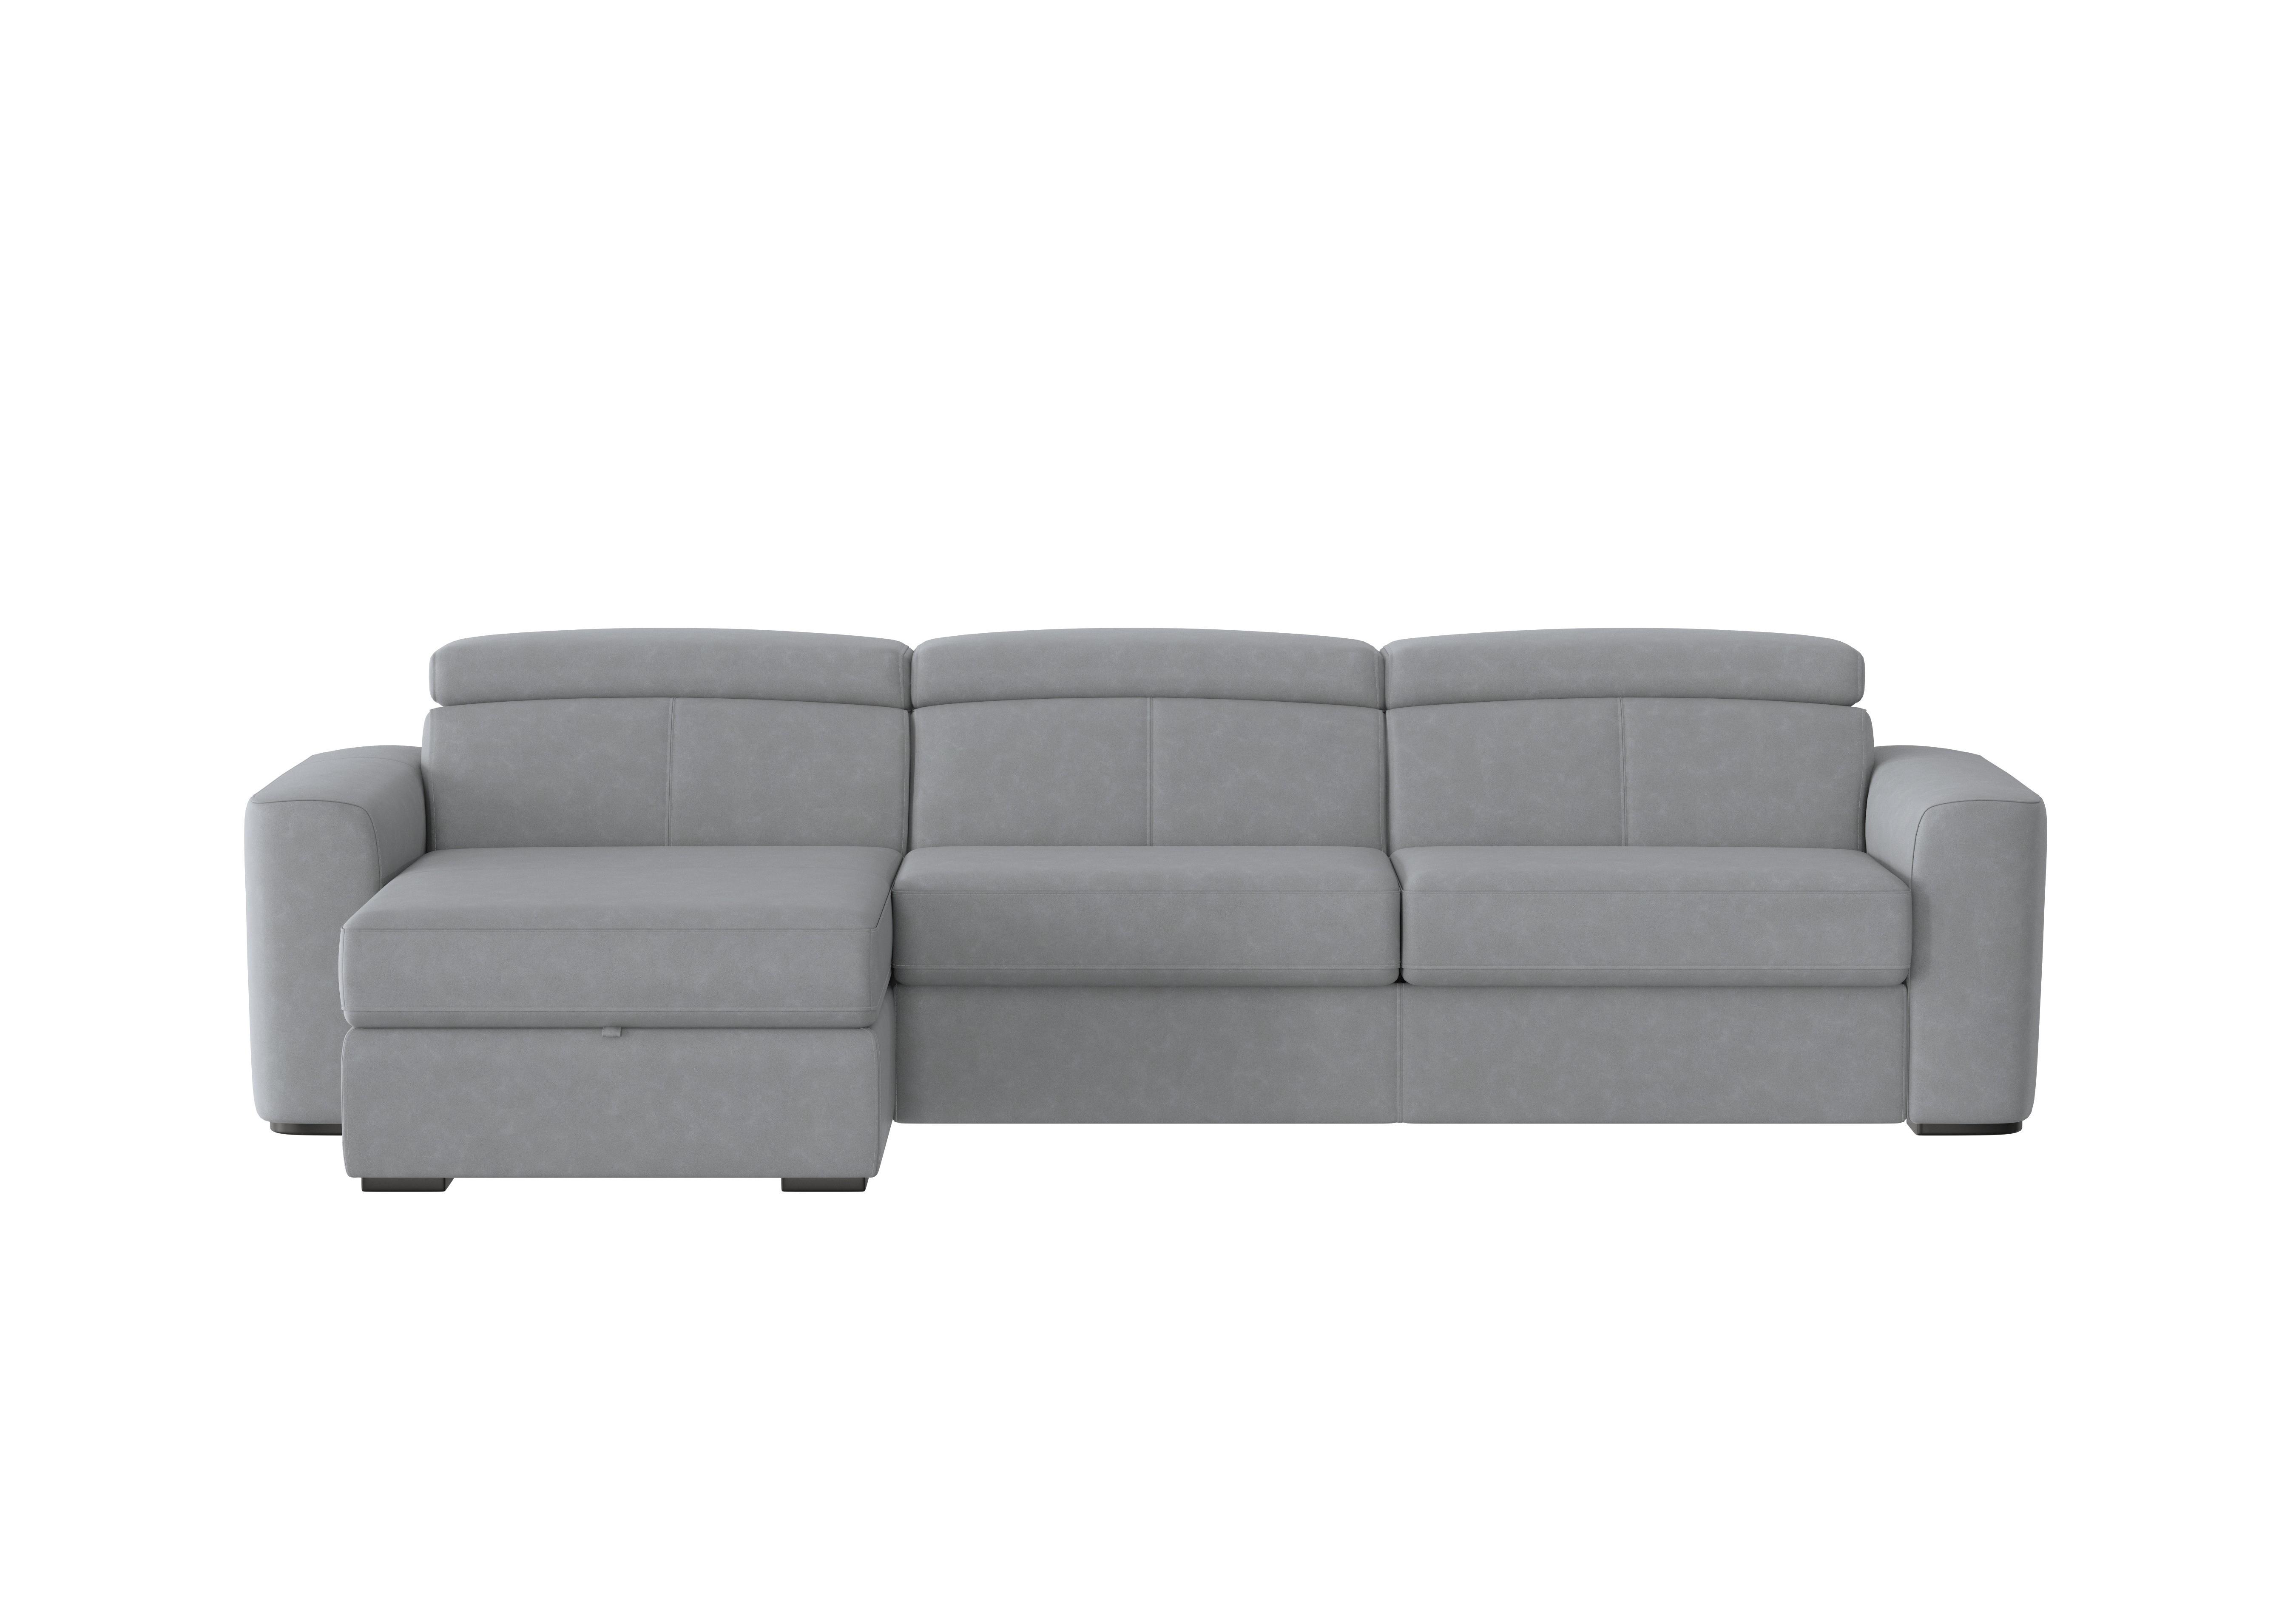 Infinity Fabric Corner Chaise Sofa with Storage in Bfa-Ori-R07 Bluish Grey on Furniture Village